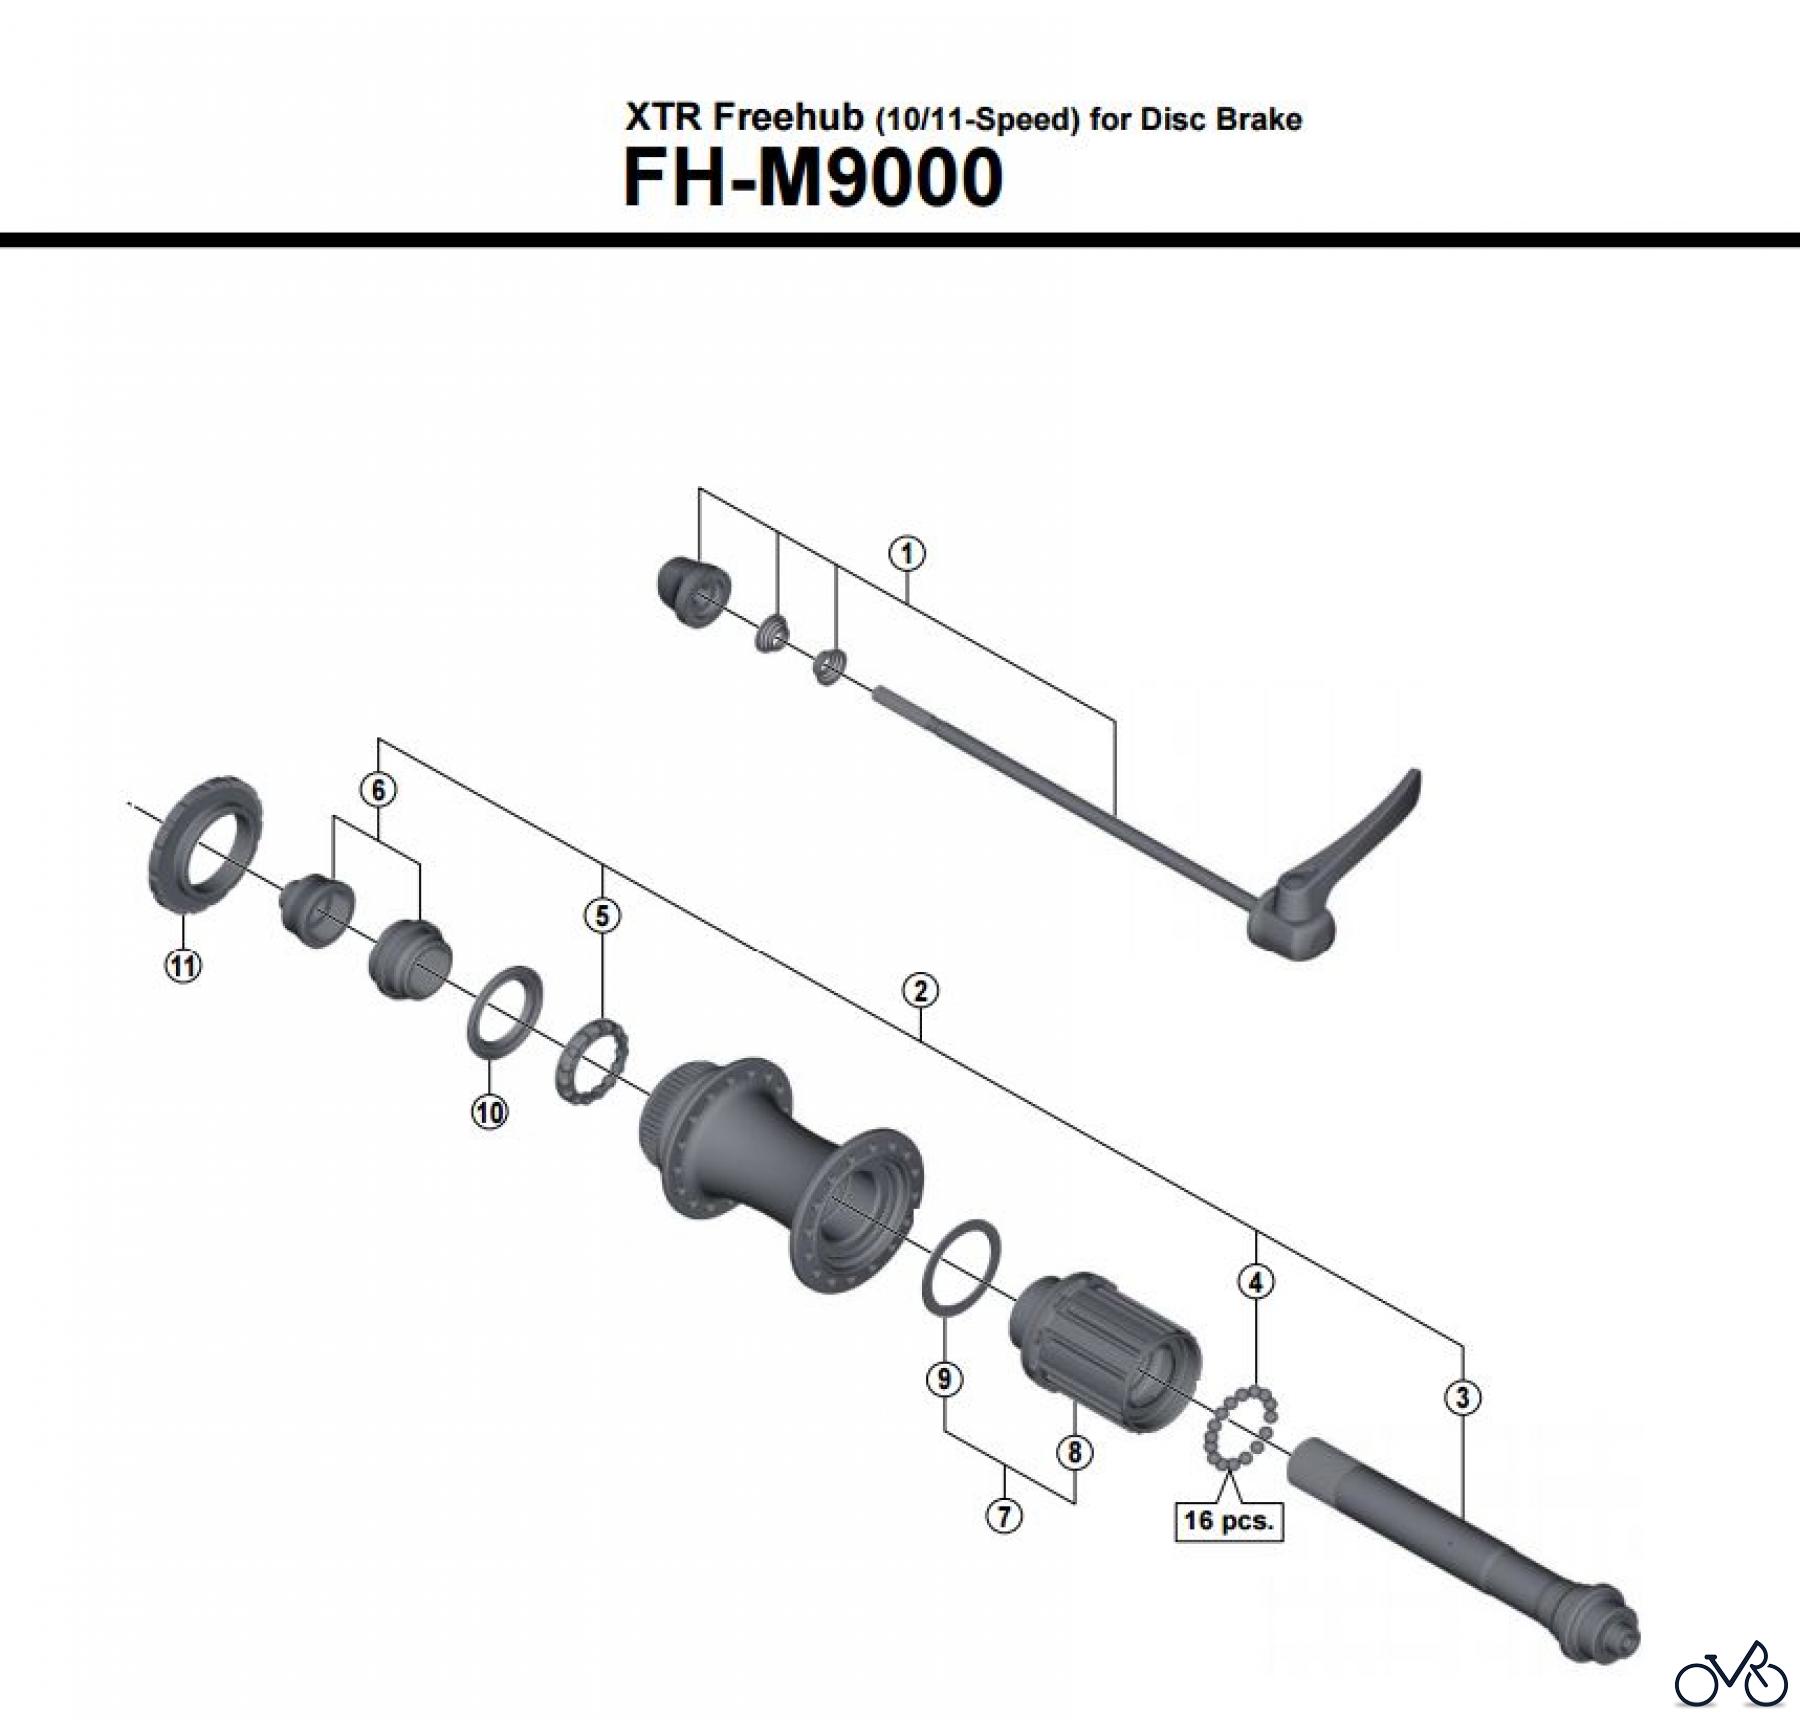  Shimano FH Free Hub - Freilaufnabe FH-M9000 XTR Freehub (10/11-Speed) for Disc Brake